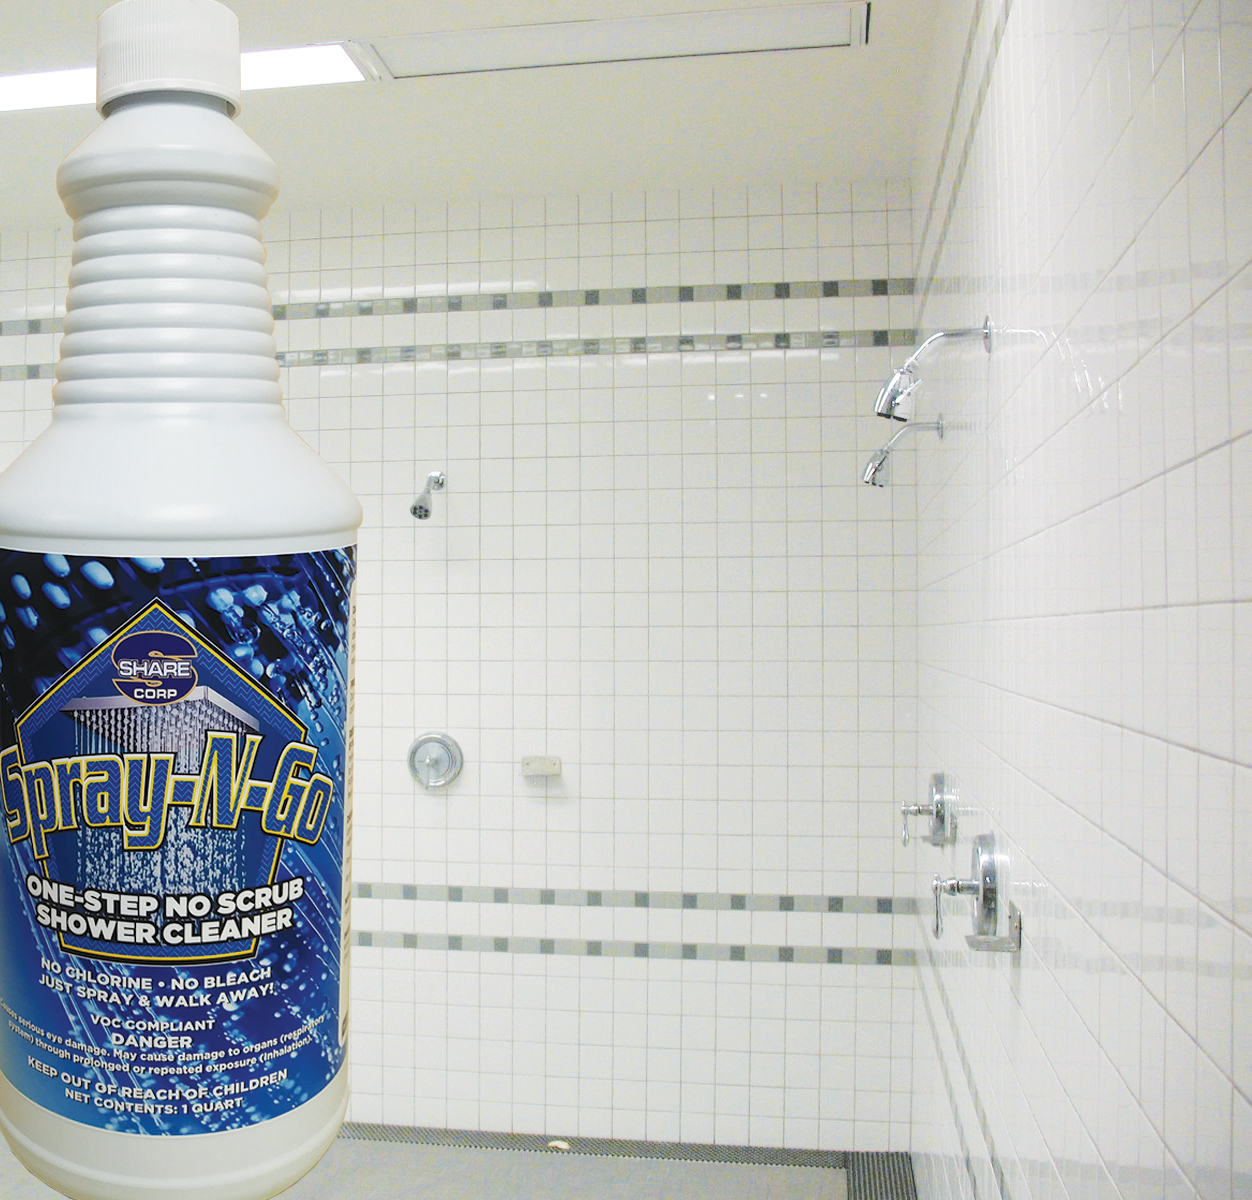 SPRAY-N-GO [One-Step - No Scrub Shower Cleaner]